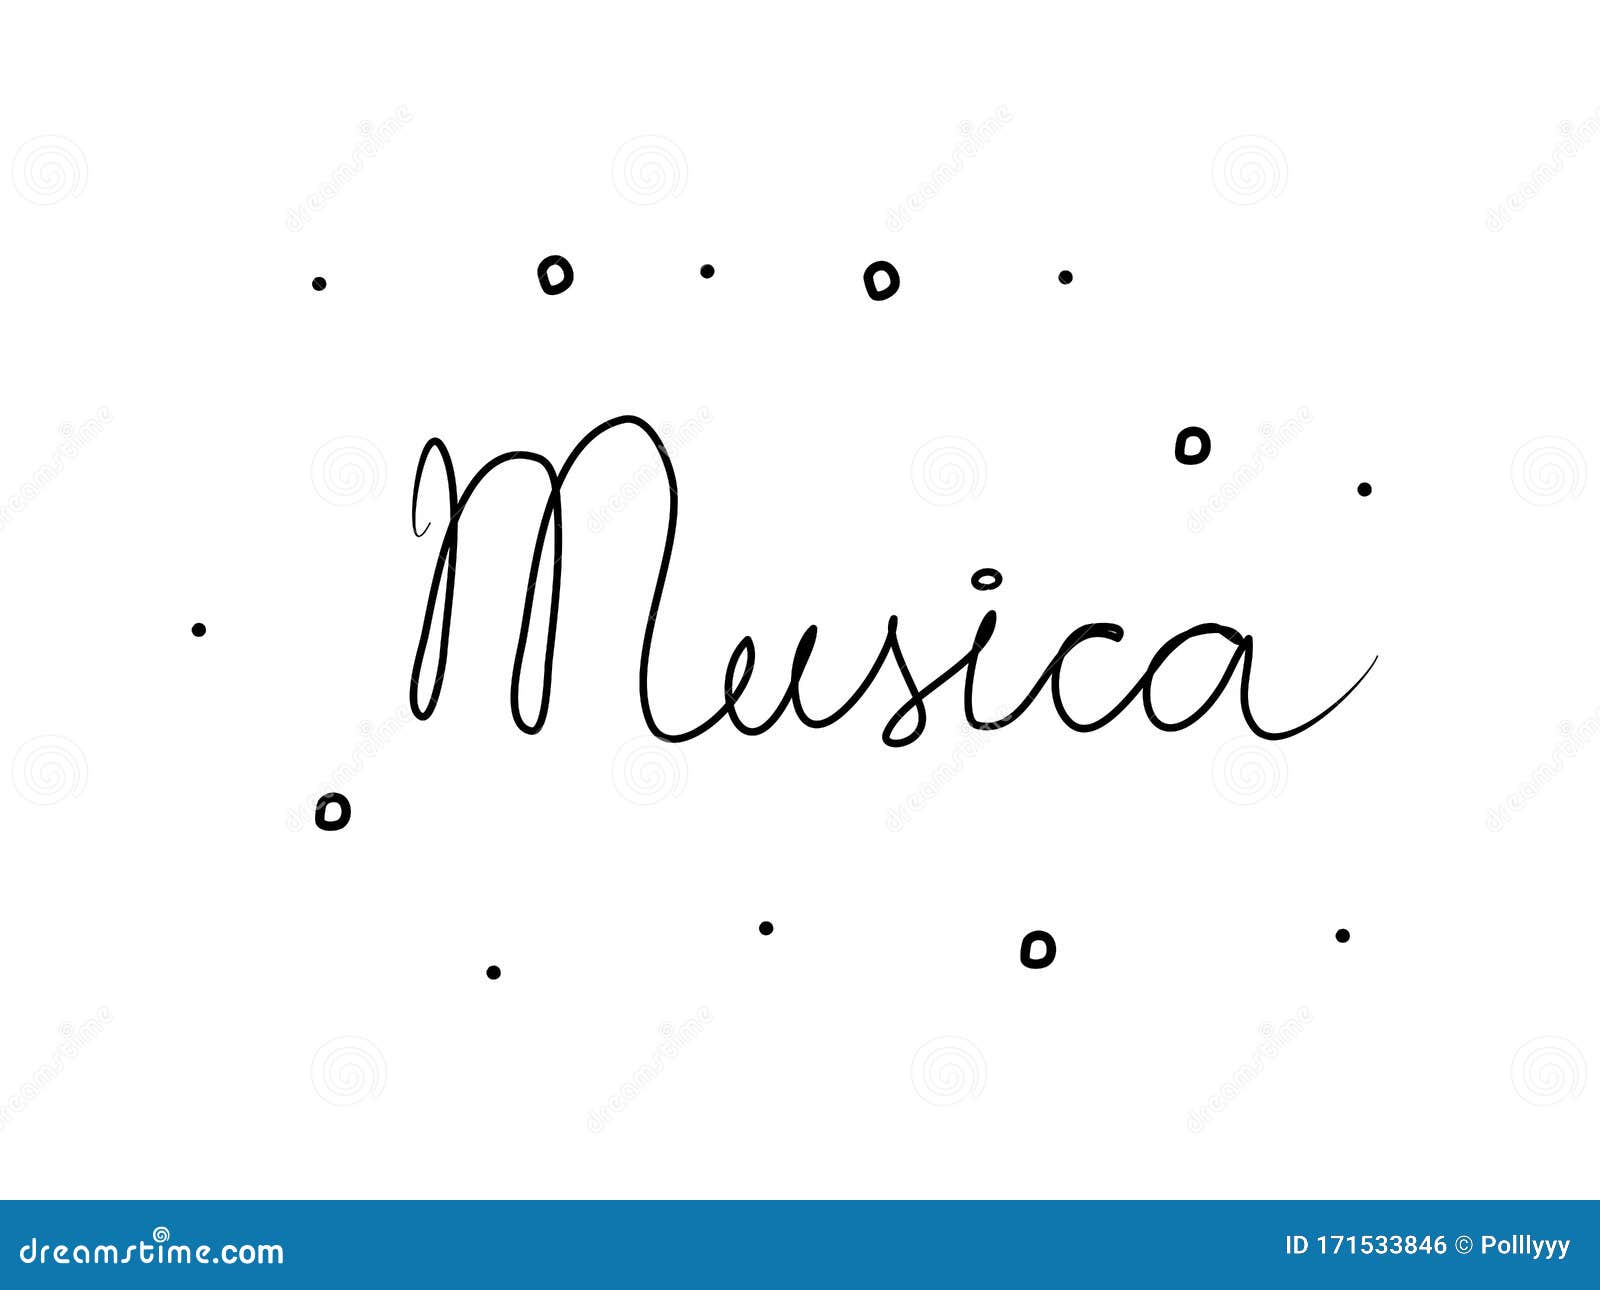 musica phrase handwritten with a calligraphy brush. music in spanish. modern brush calligraphy.  word black